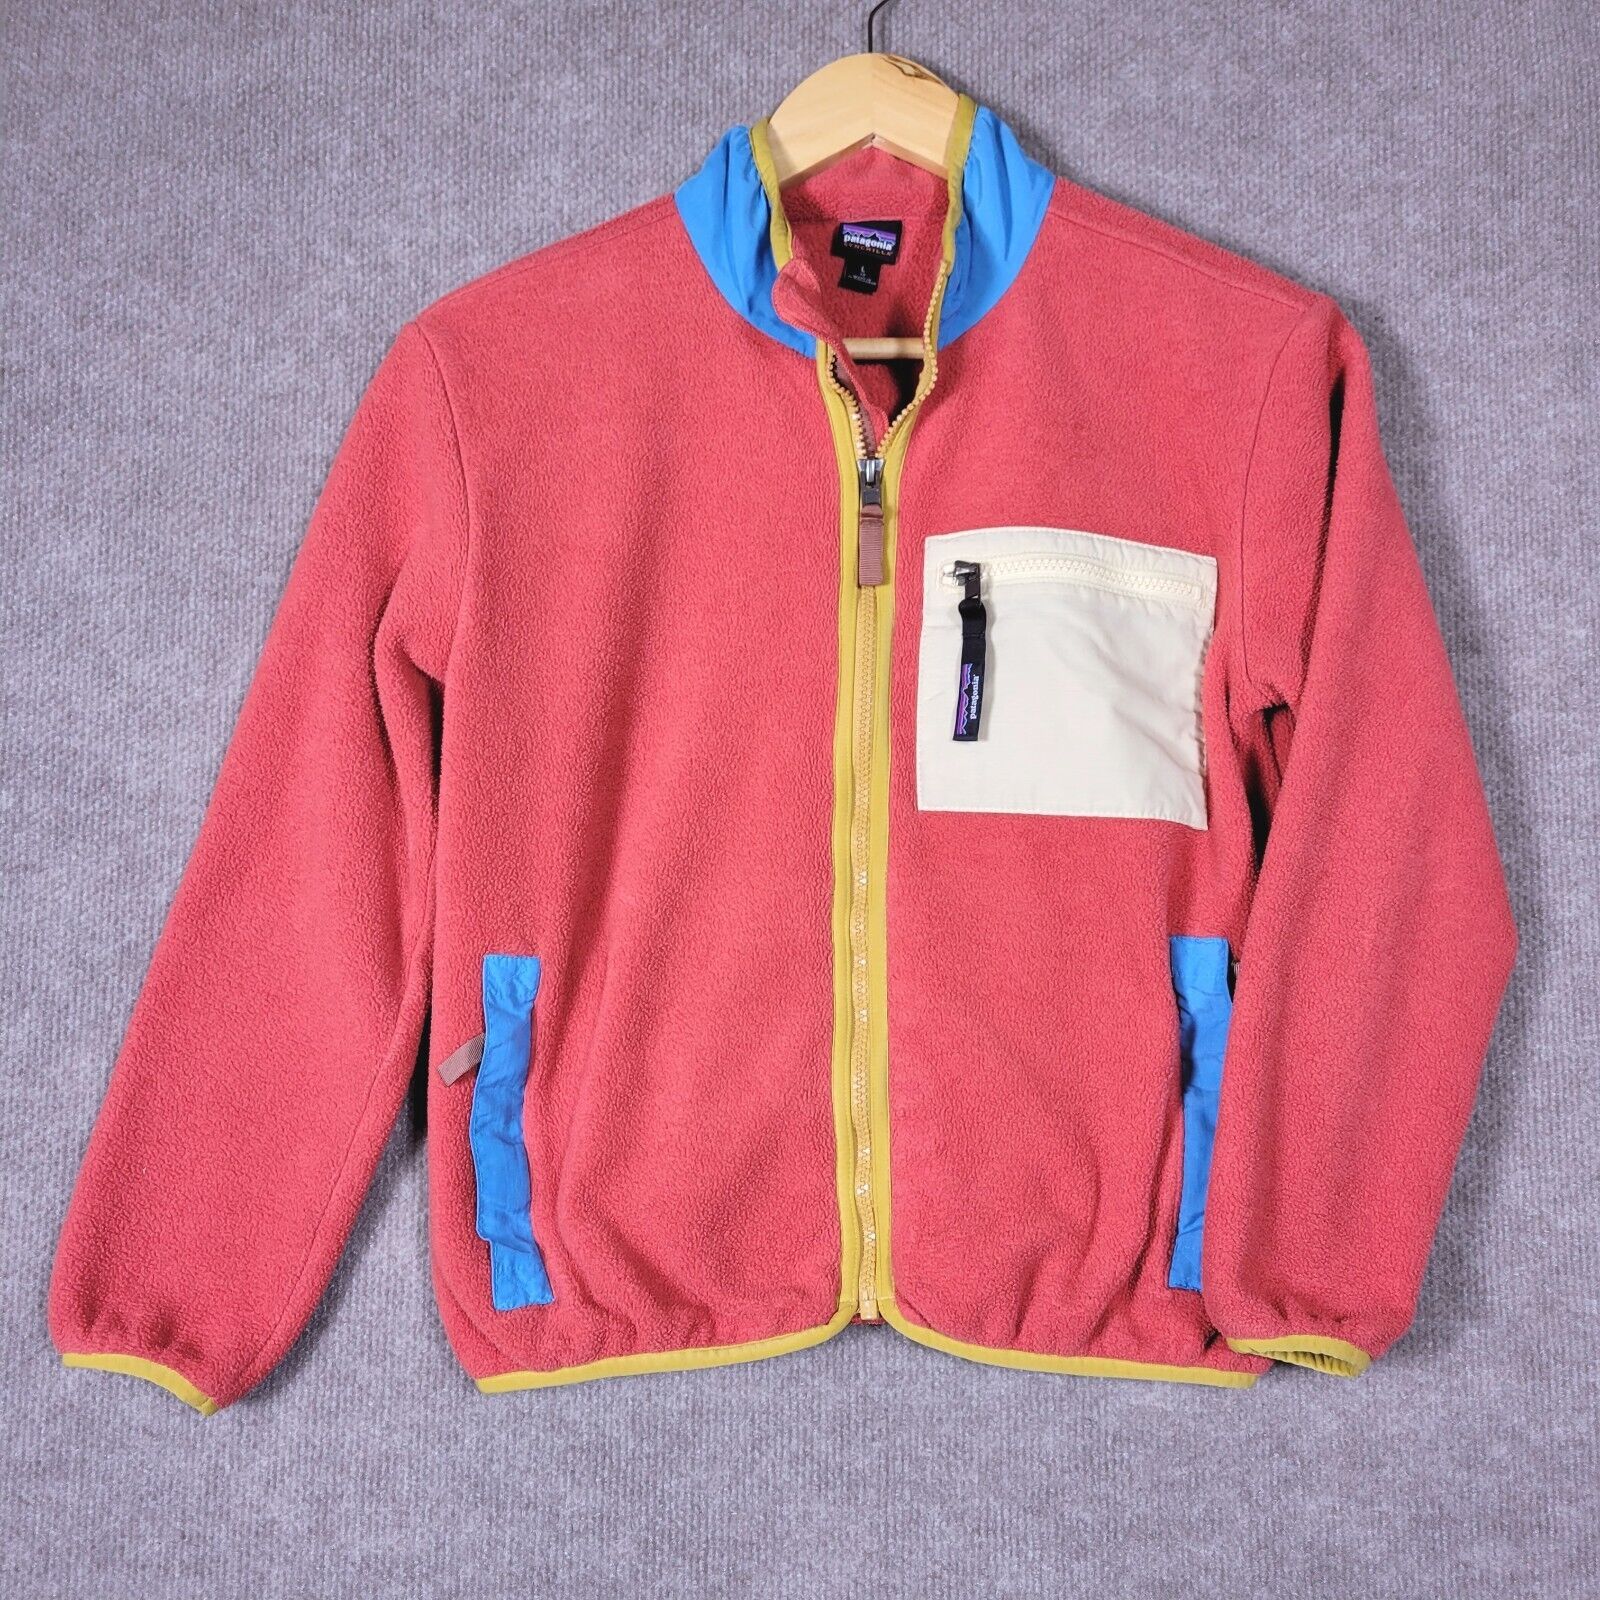 PATAGONIA Jacket Kids Large/12 Synchilla Fleece Sumac Red Multicolor Zip Pockets